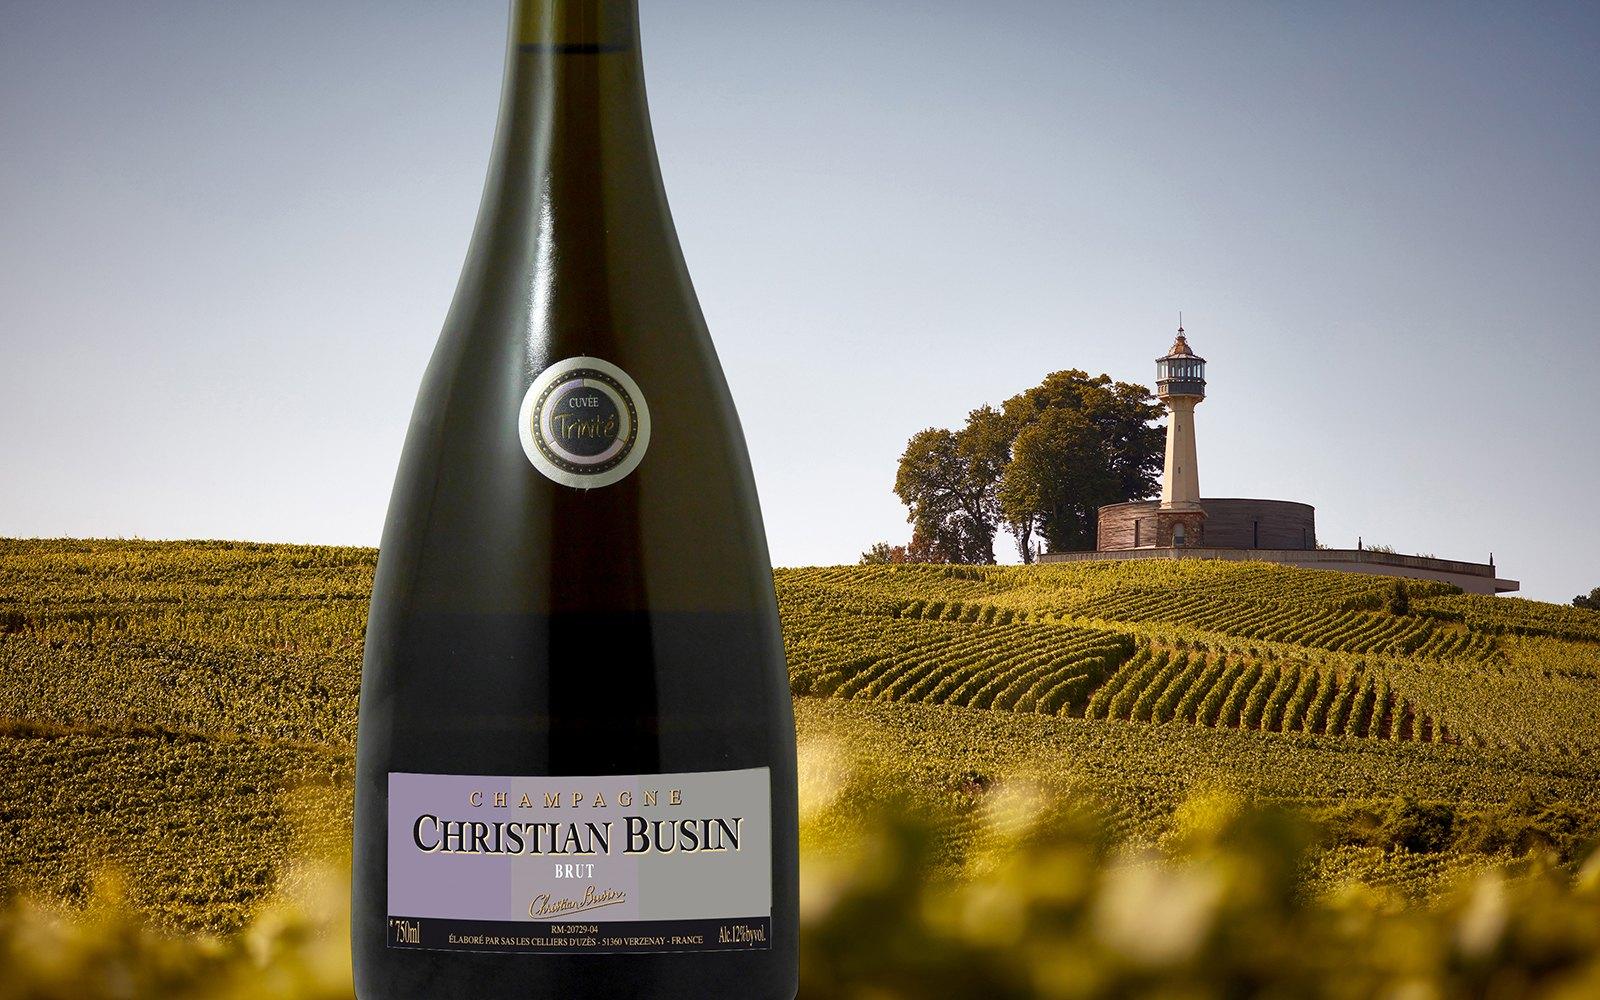 Champagne Christian Busin